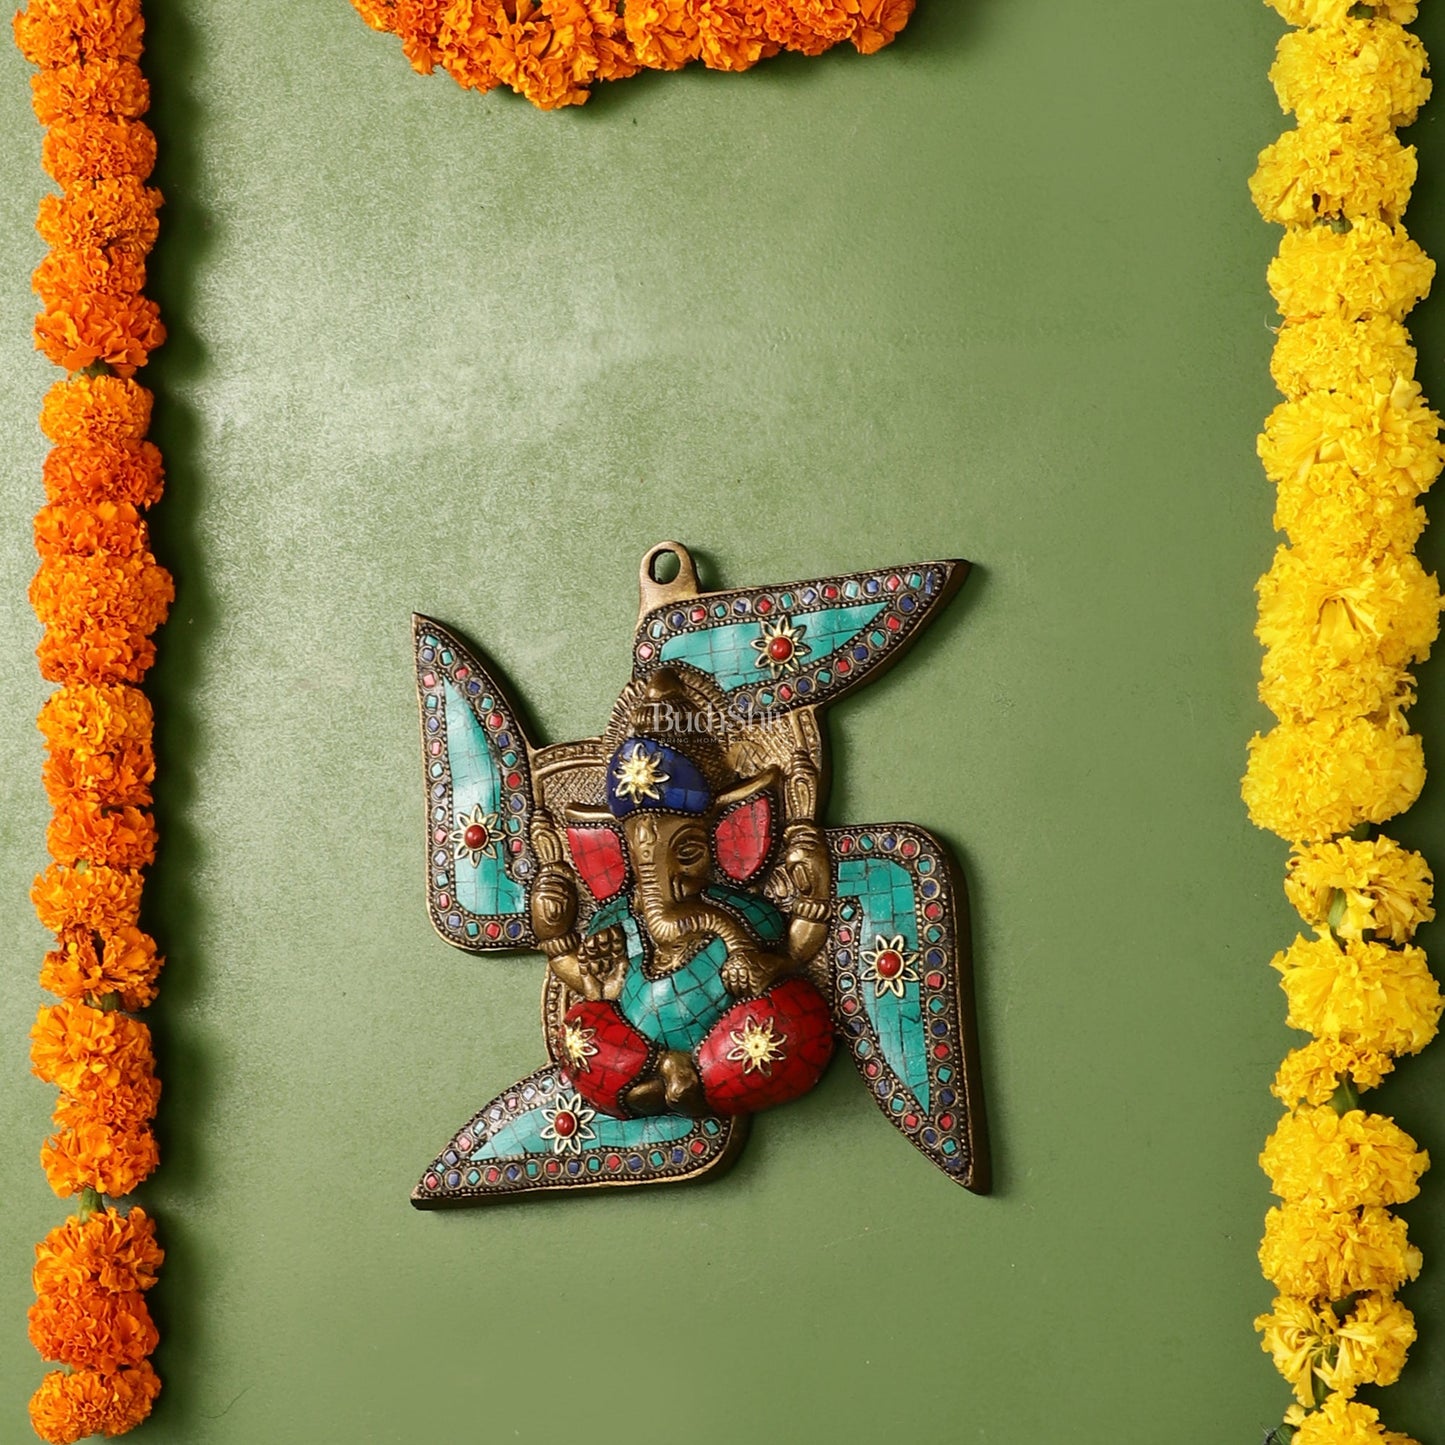 Brass Ganesha Wall Hanging on Swastik - 7 x 7 inch - Budhshiv.com